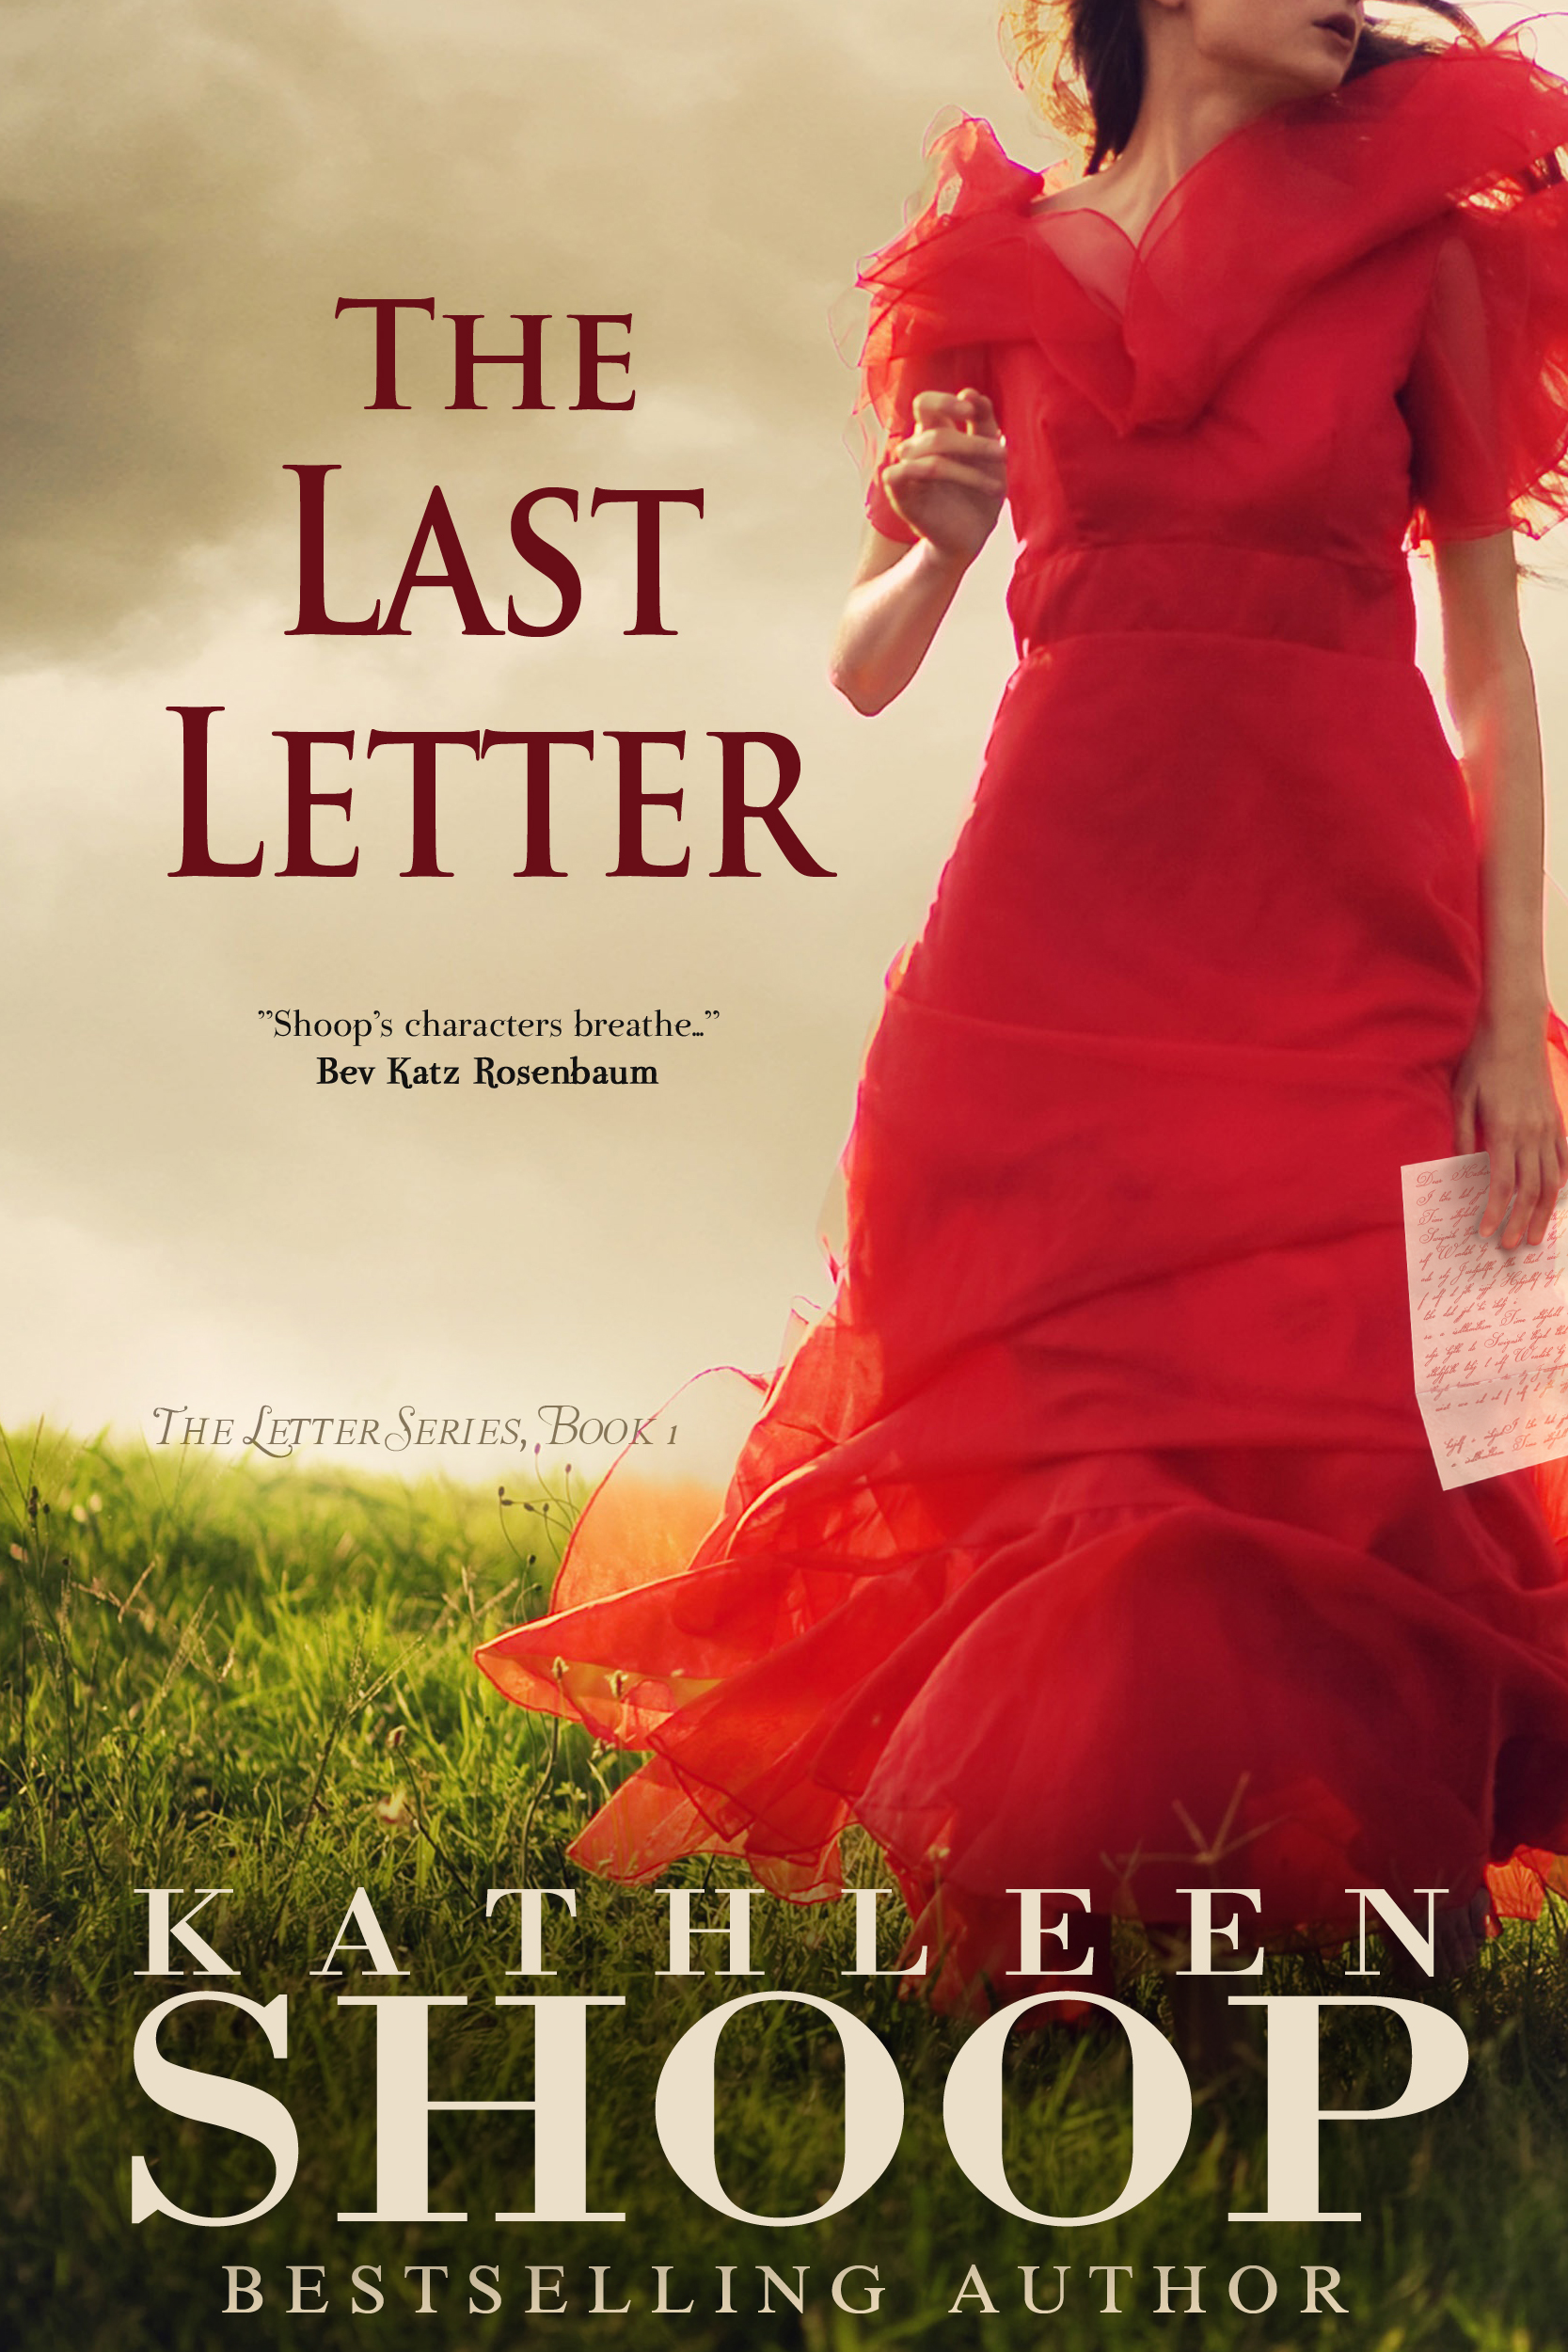 The Last Letter novel book cover